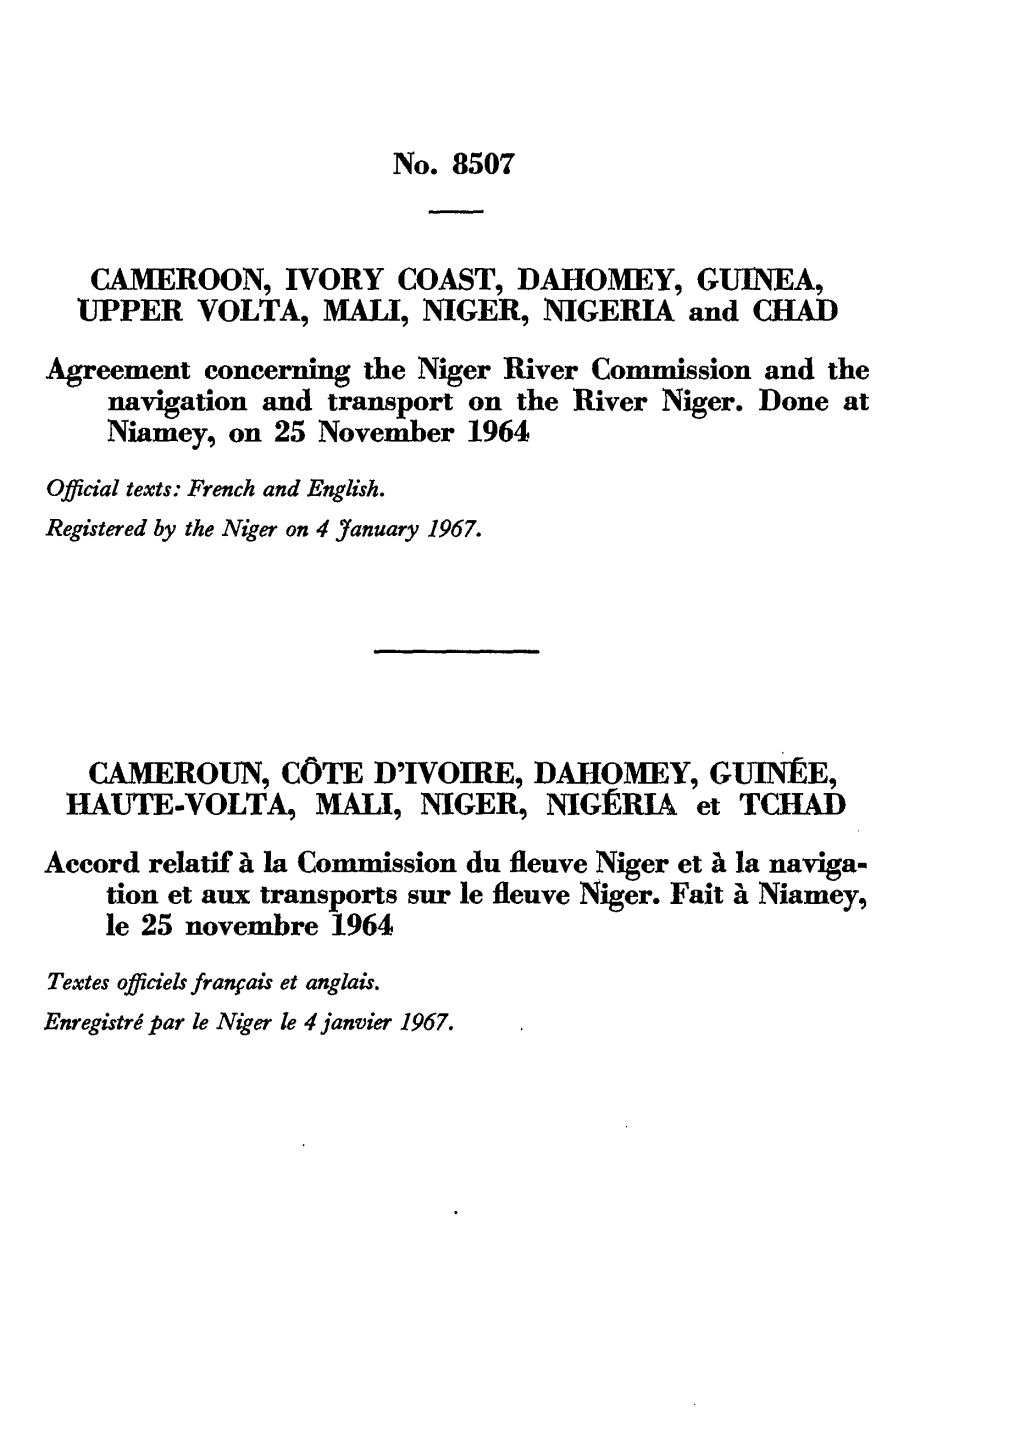 No. 8507 CAMEROON, IVORY COAST, DAHOMEY, GUINEA, UPPER VOLTA, MALI, NIGER